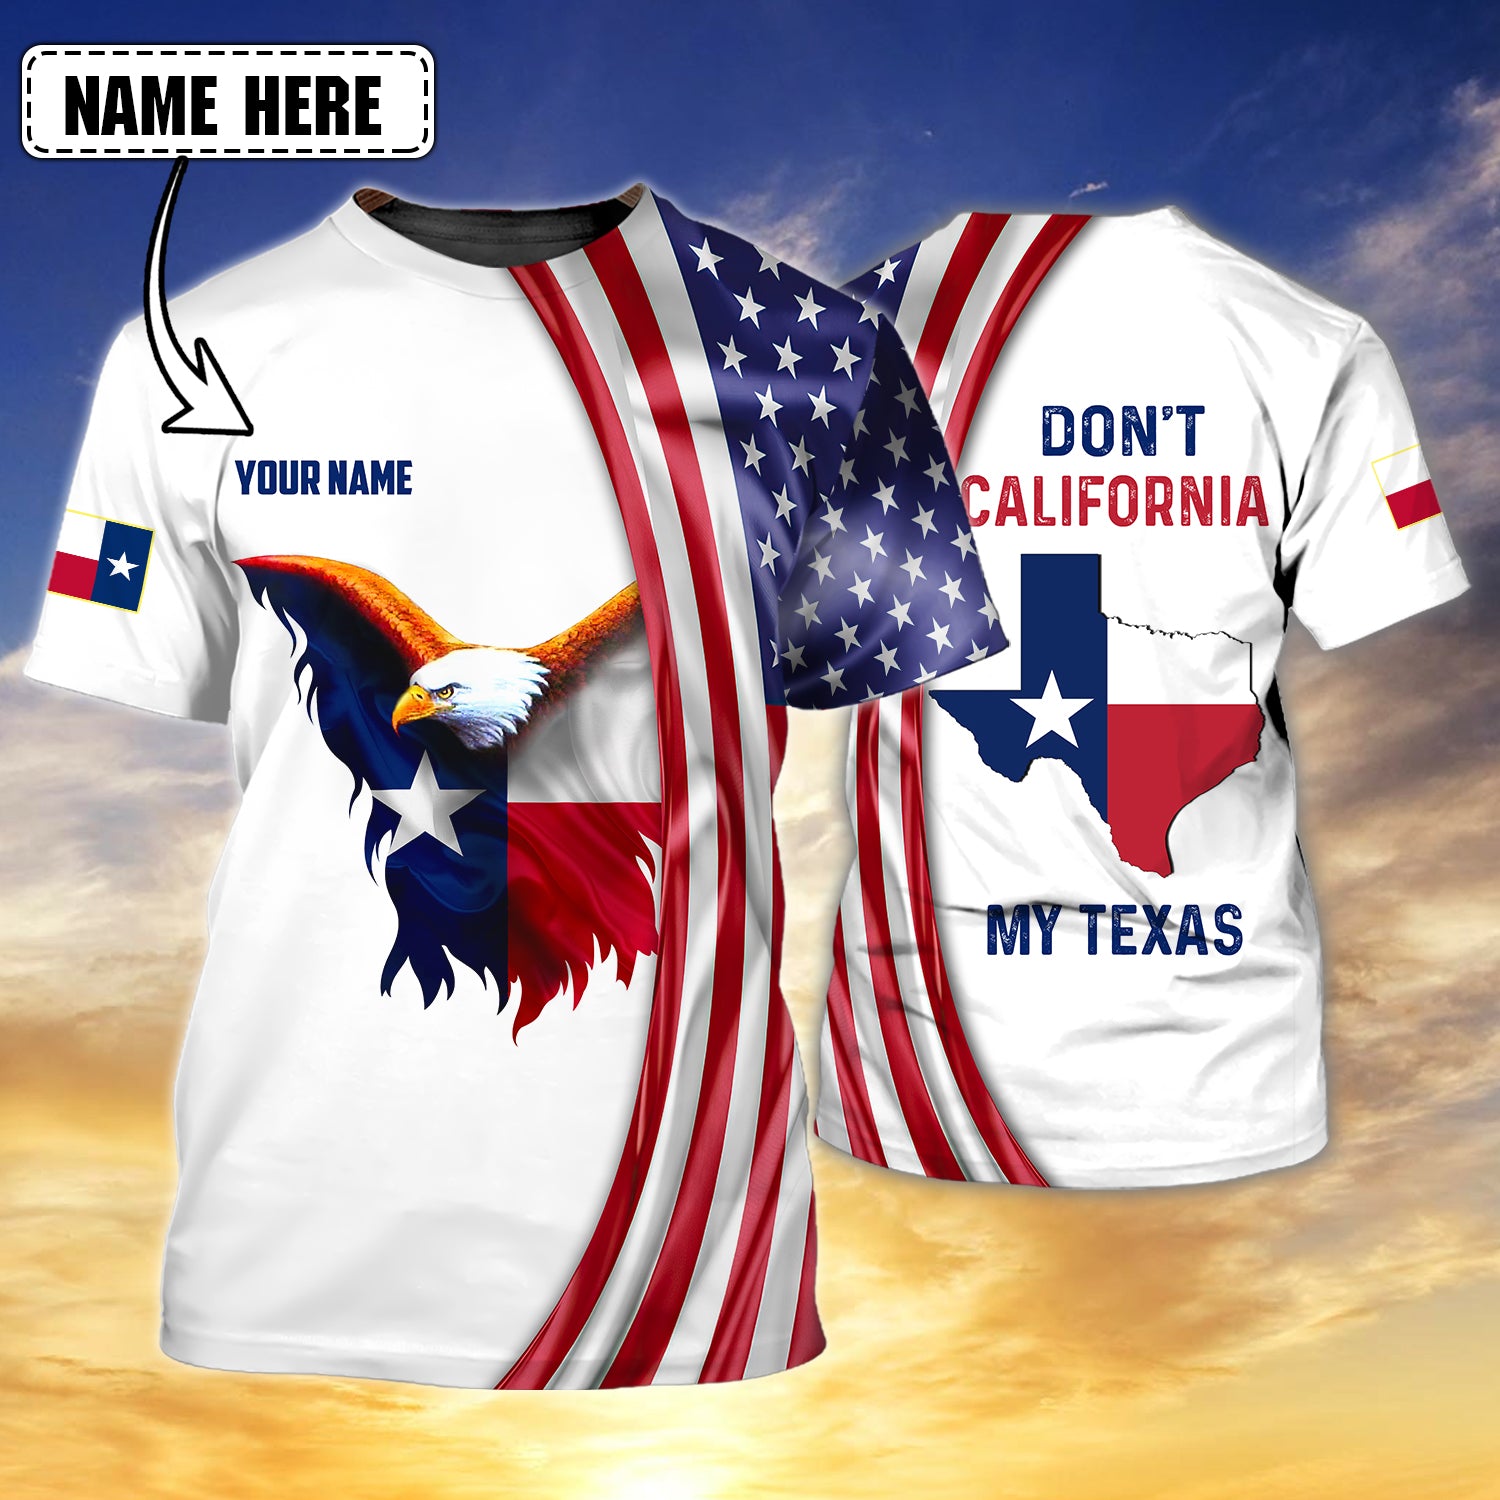 Don't California My Texas - Personalized Name 3D Tshirt - QB95